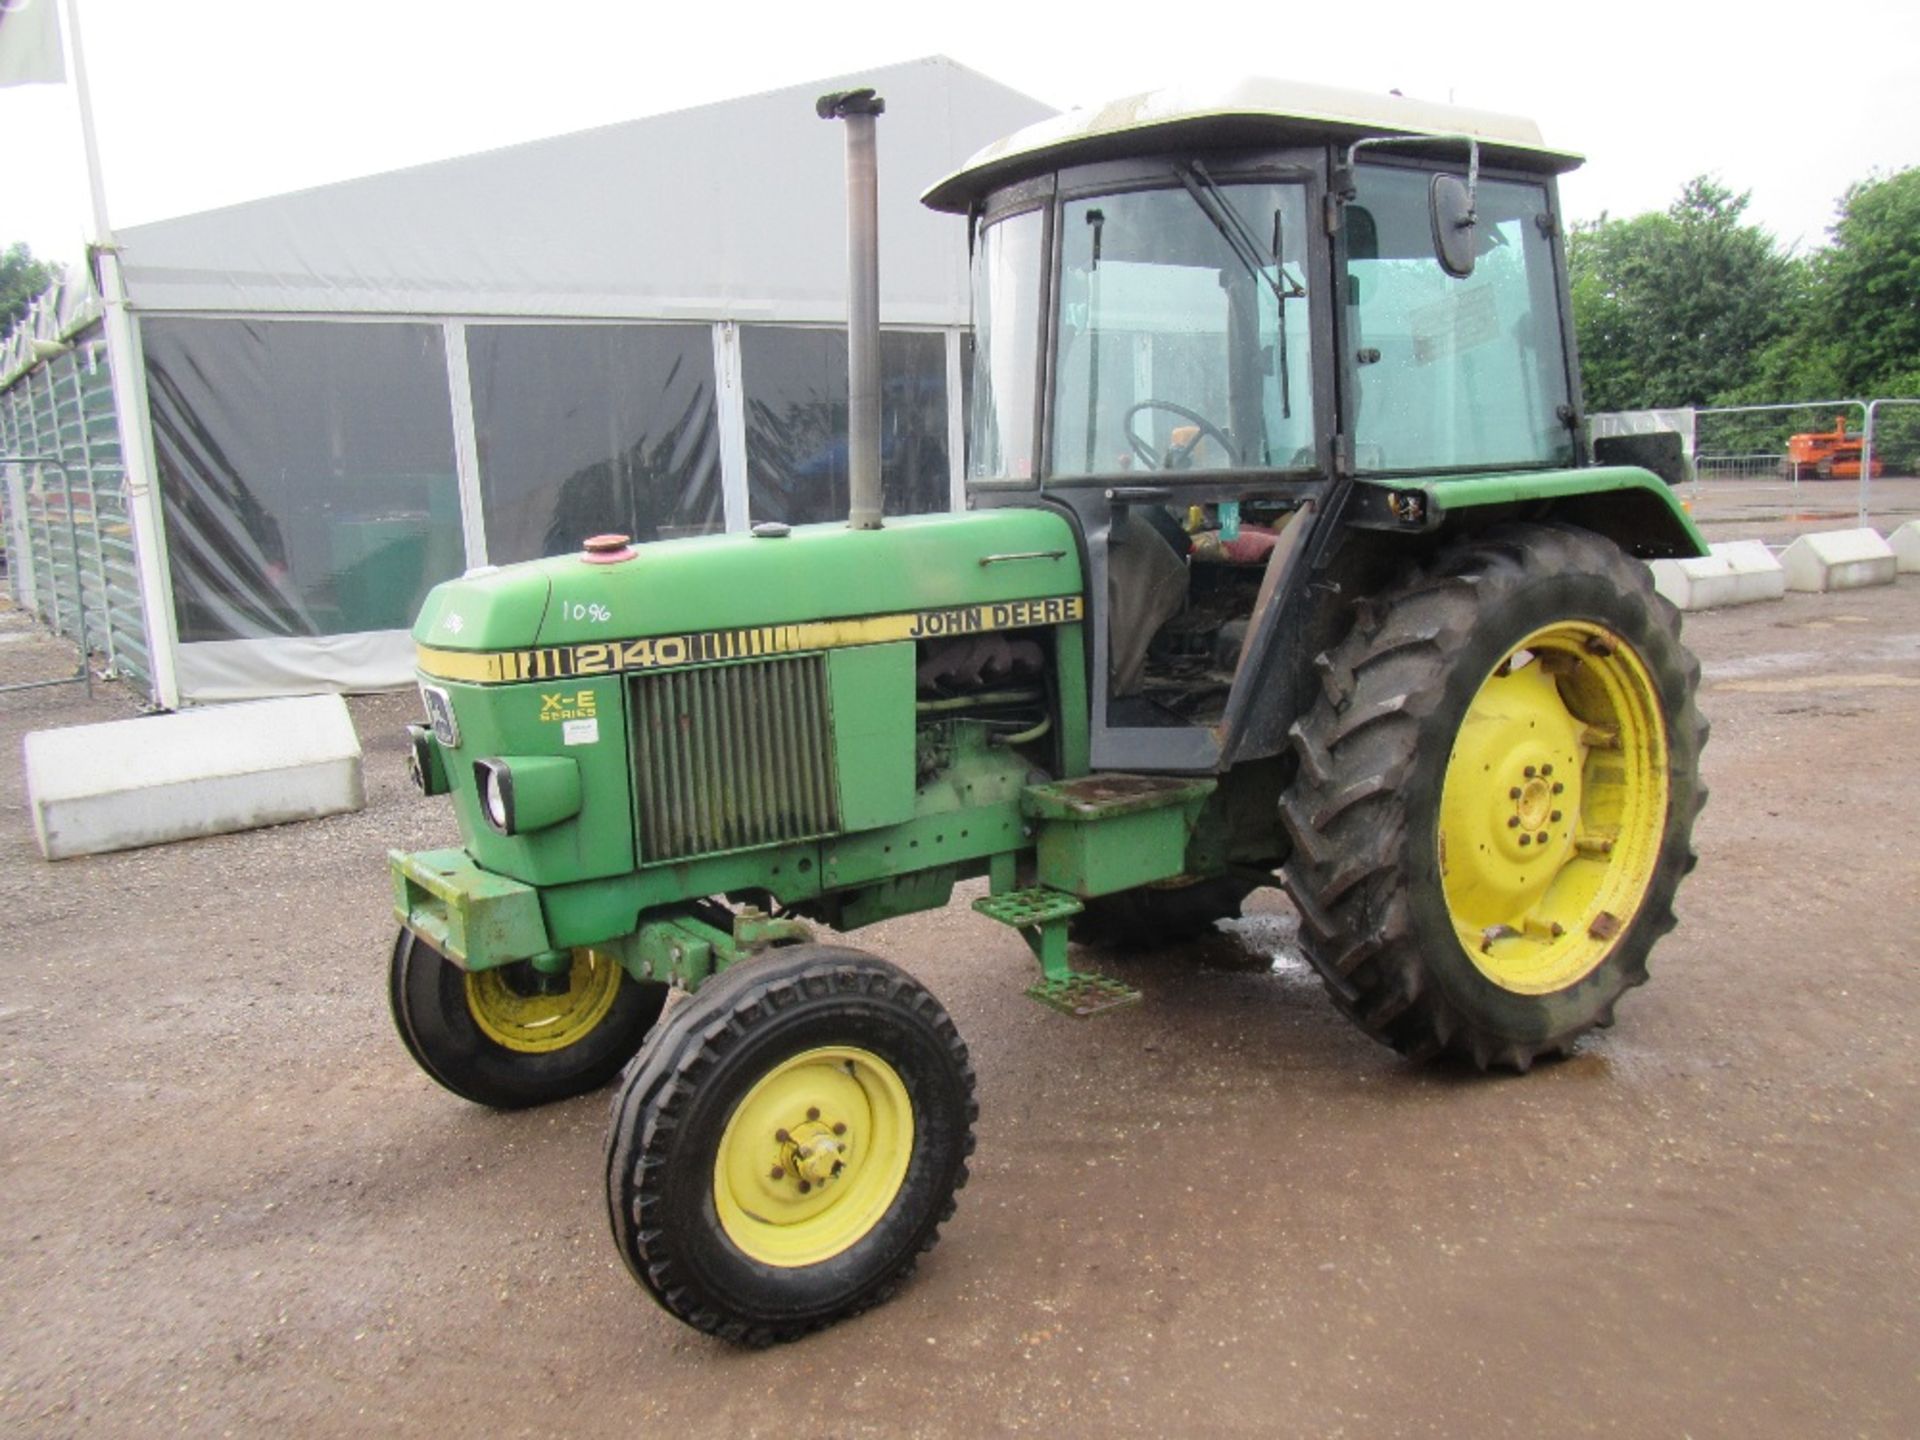 John Deere 2140 Tractor X-E series Reg. No. B841 YEW